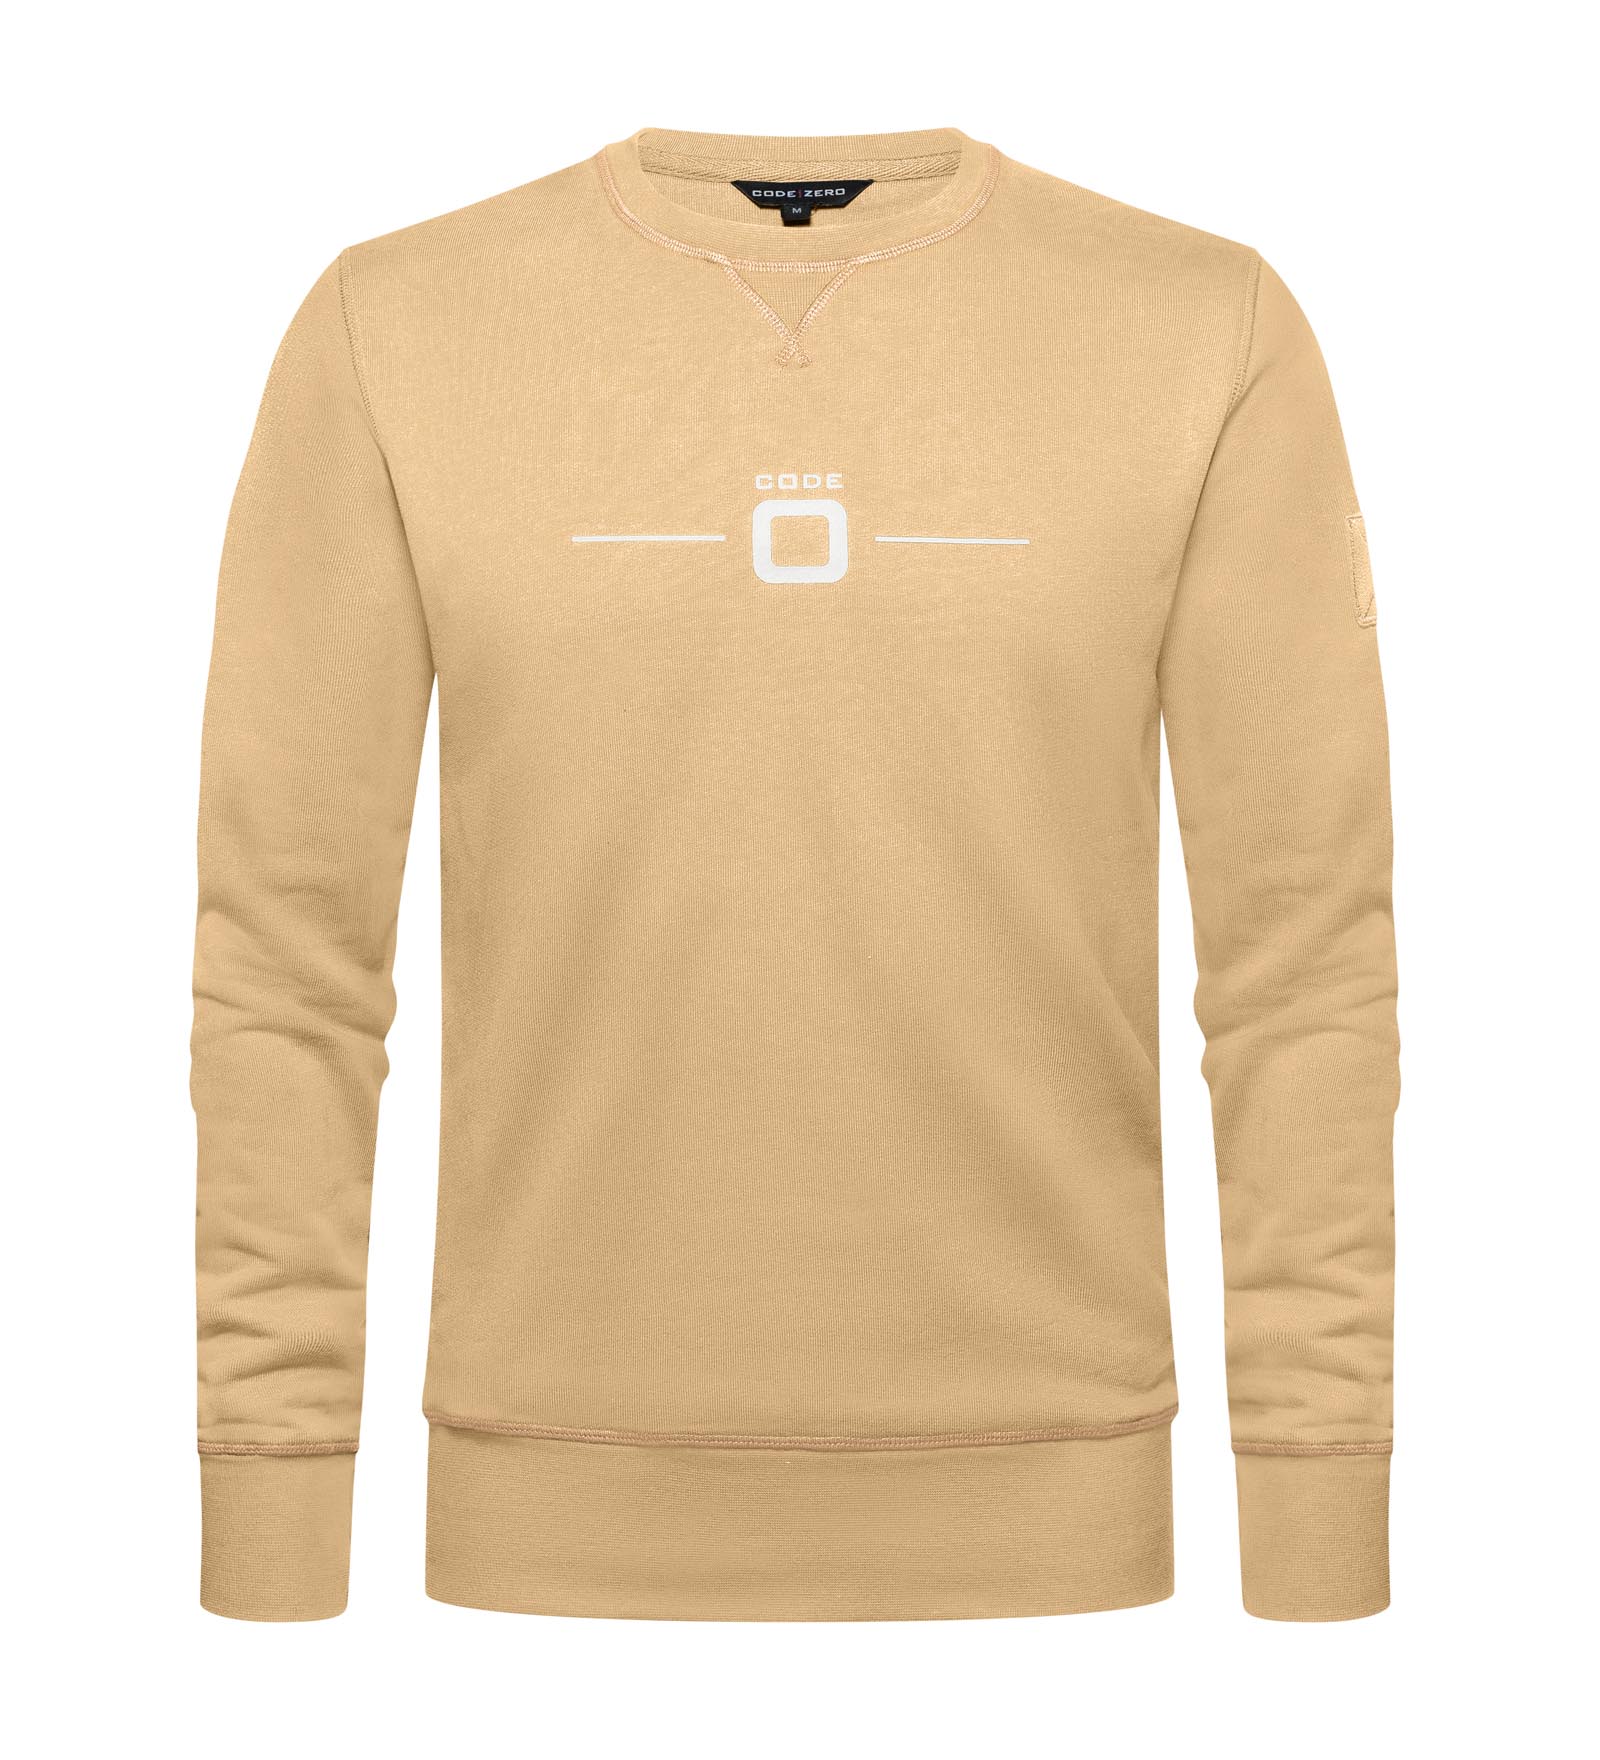 Sweatshirt Herren Upwind beige M CODE-ZERO von CODE-ZERO